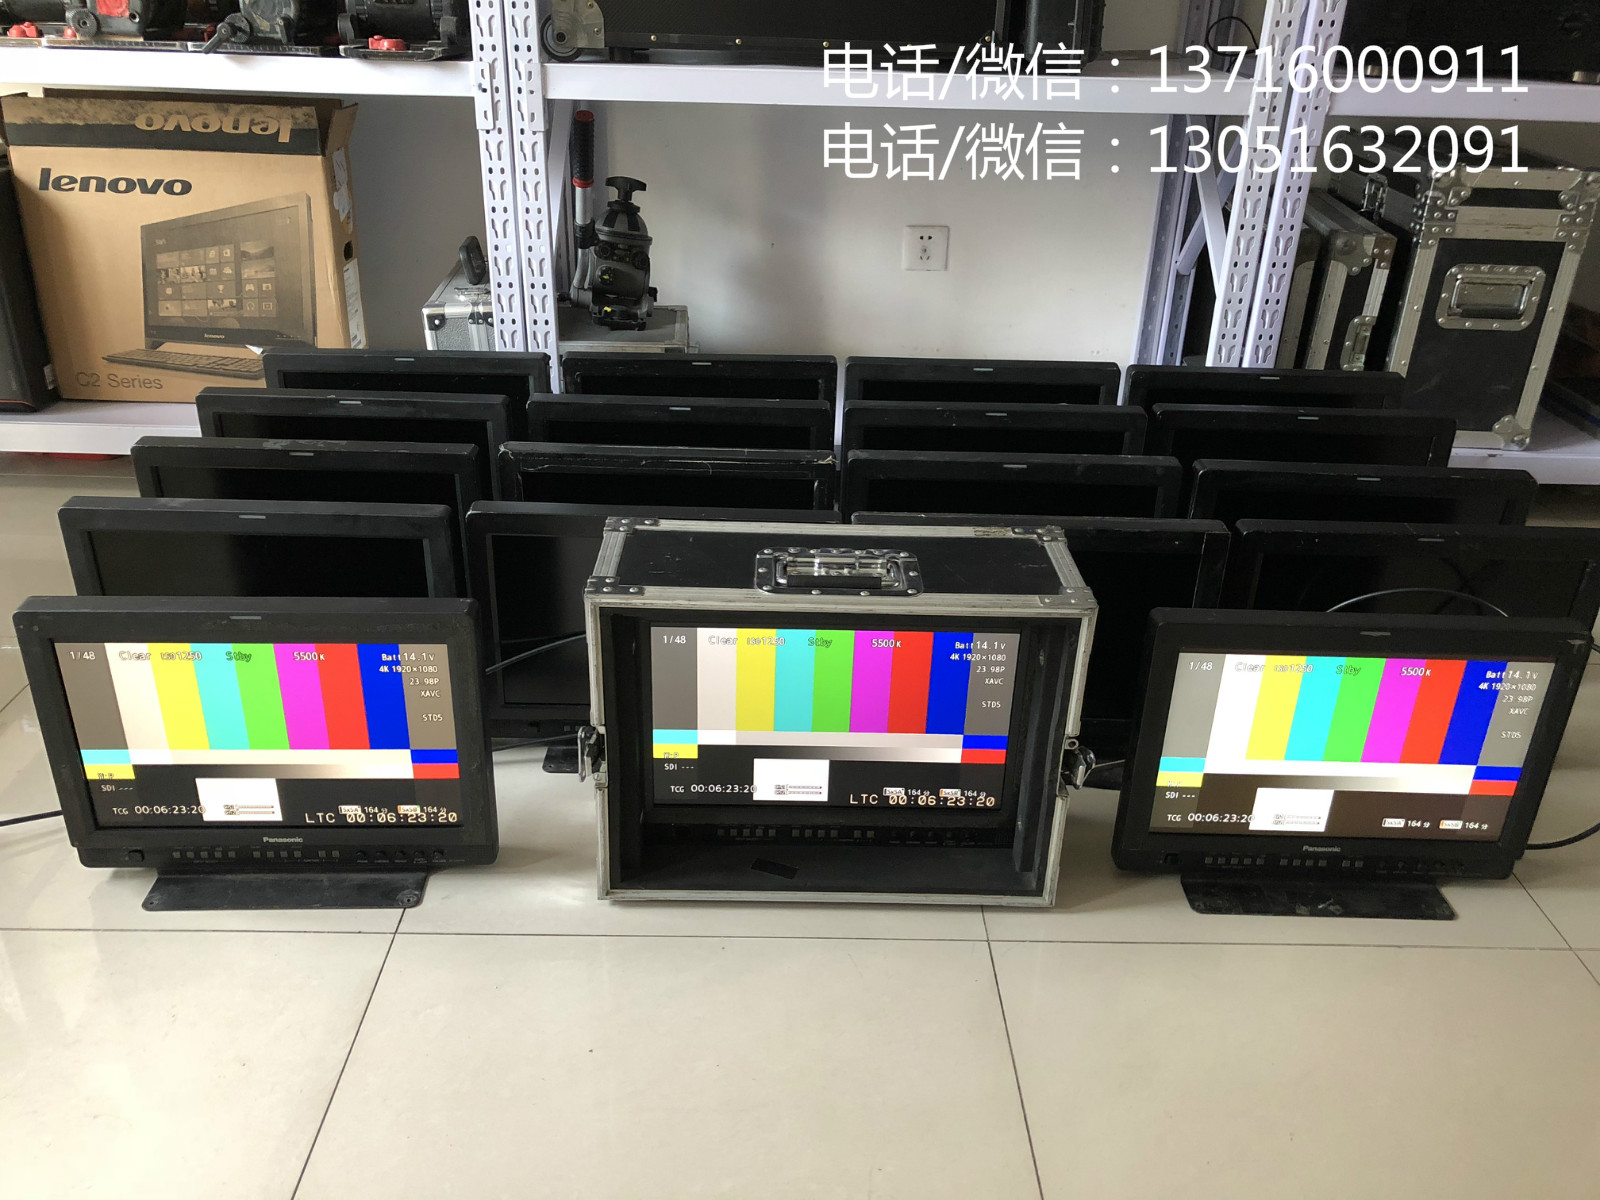  Transfer Panasonic BT-LH1710MC 17 inch LCD HD LCD monitor at low price